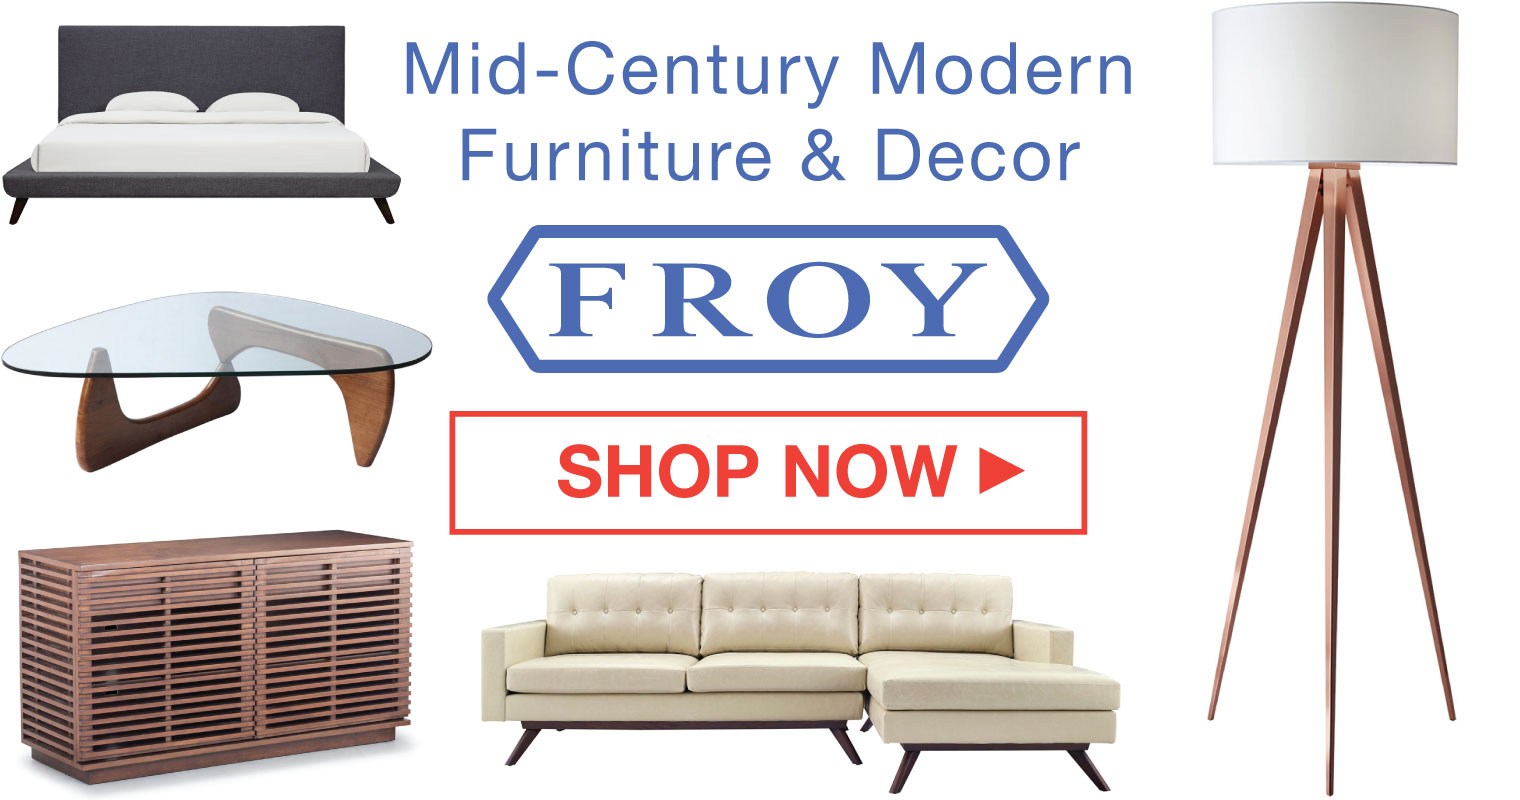 Mid-Century Modern Furniture & Decor